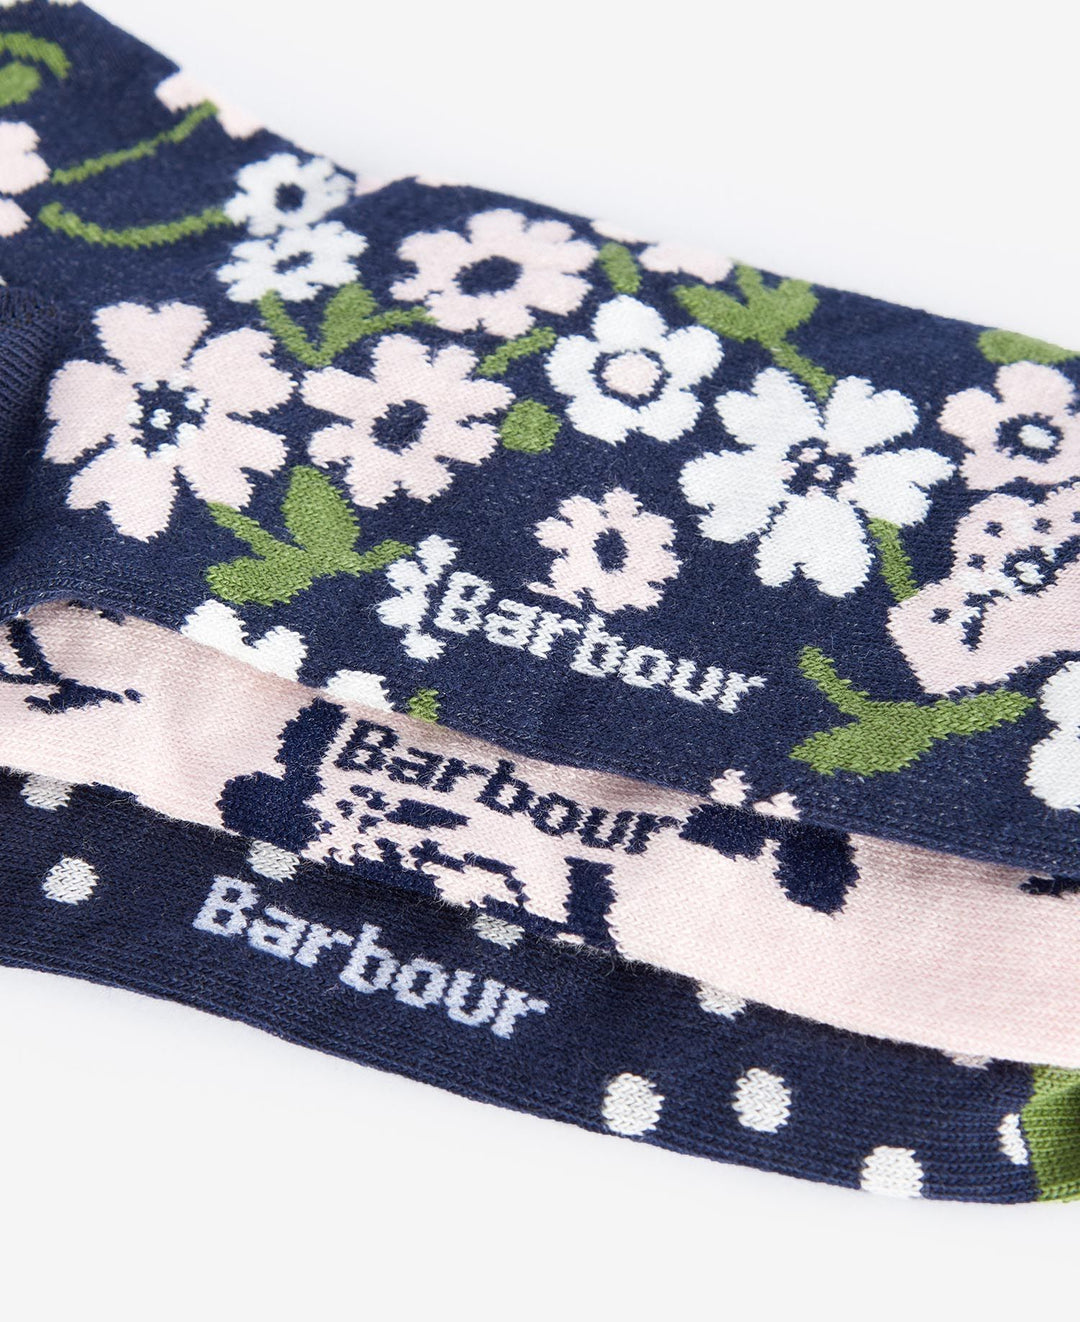 Barbour Floral Sock GS/Čarape 3/1 LGS0093